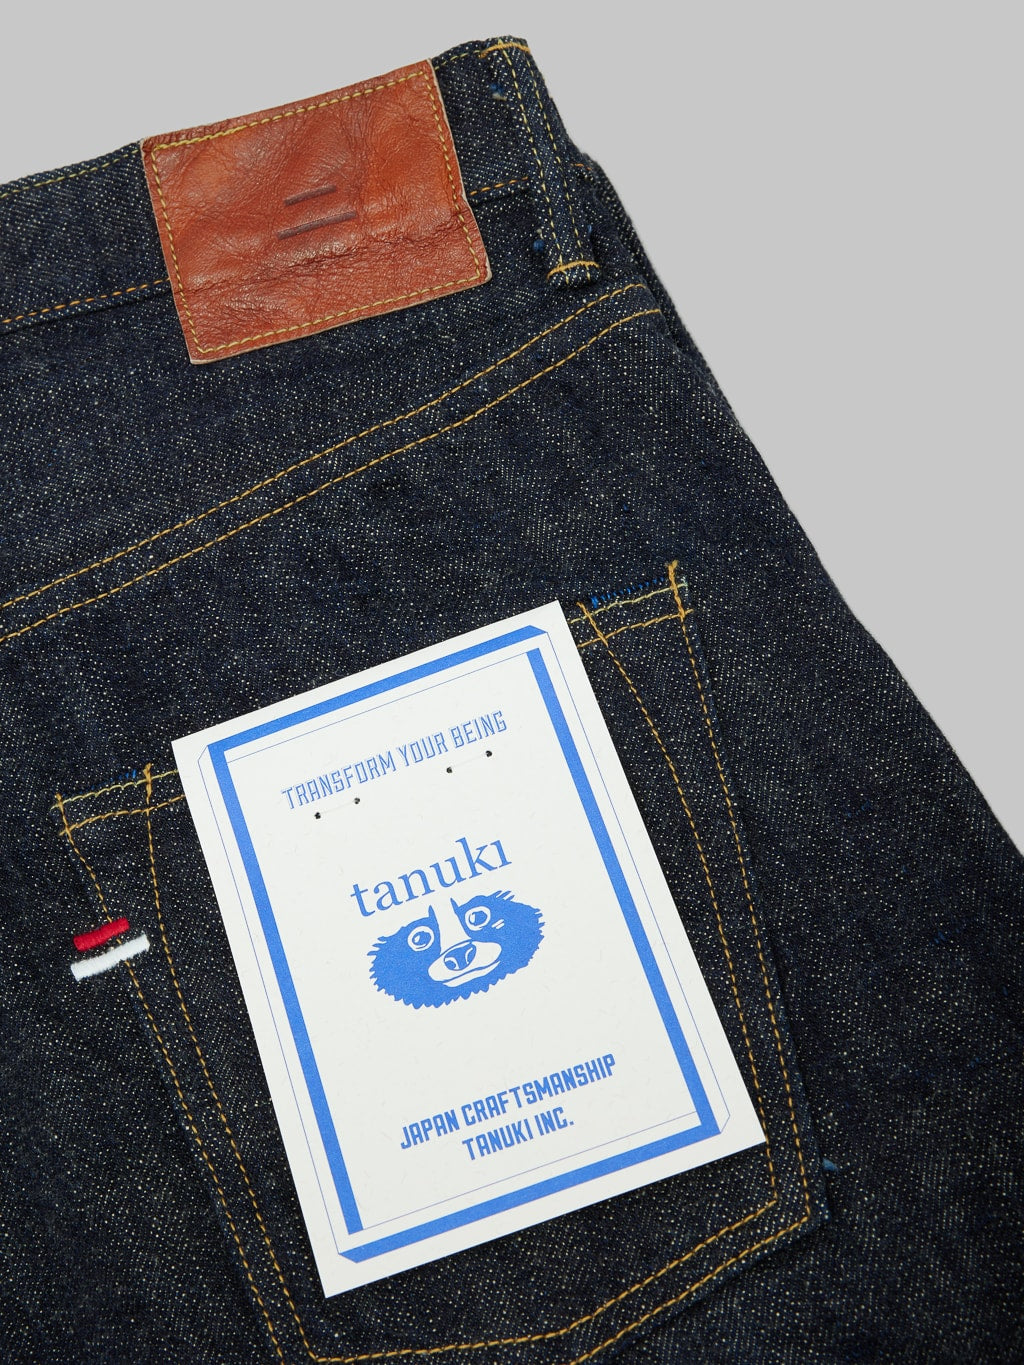 Tanuki Zetto Benkei High Tapered Jeans brand pocket flasher